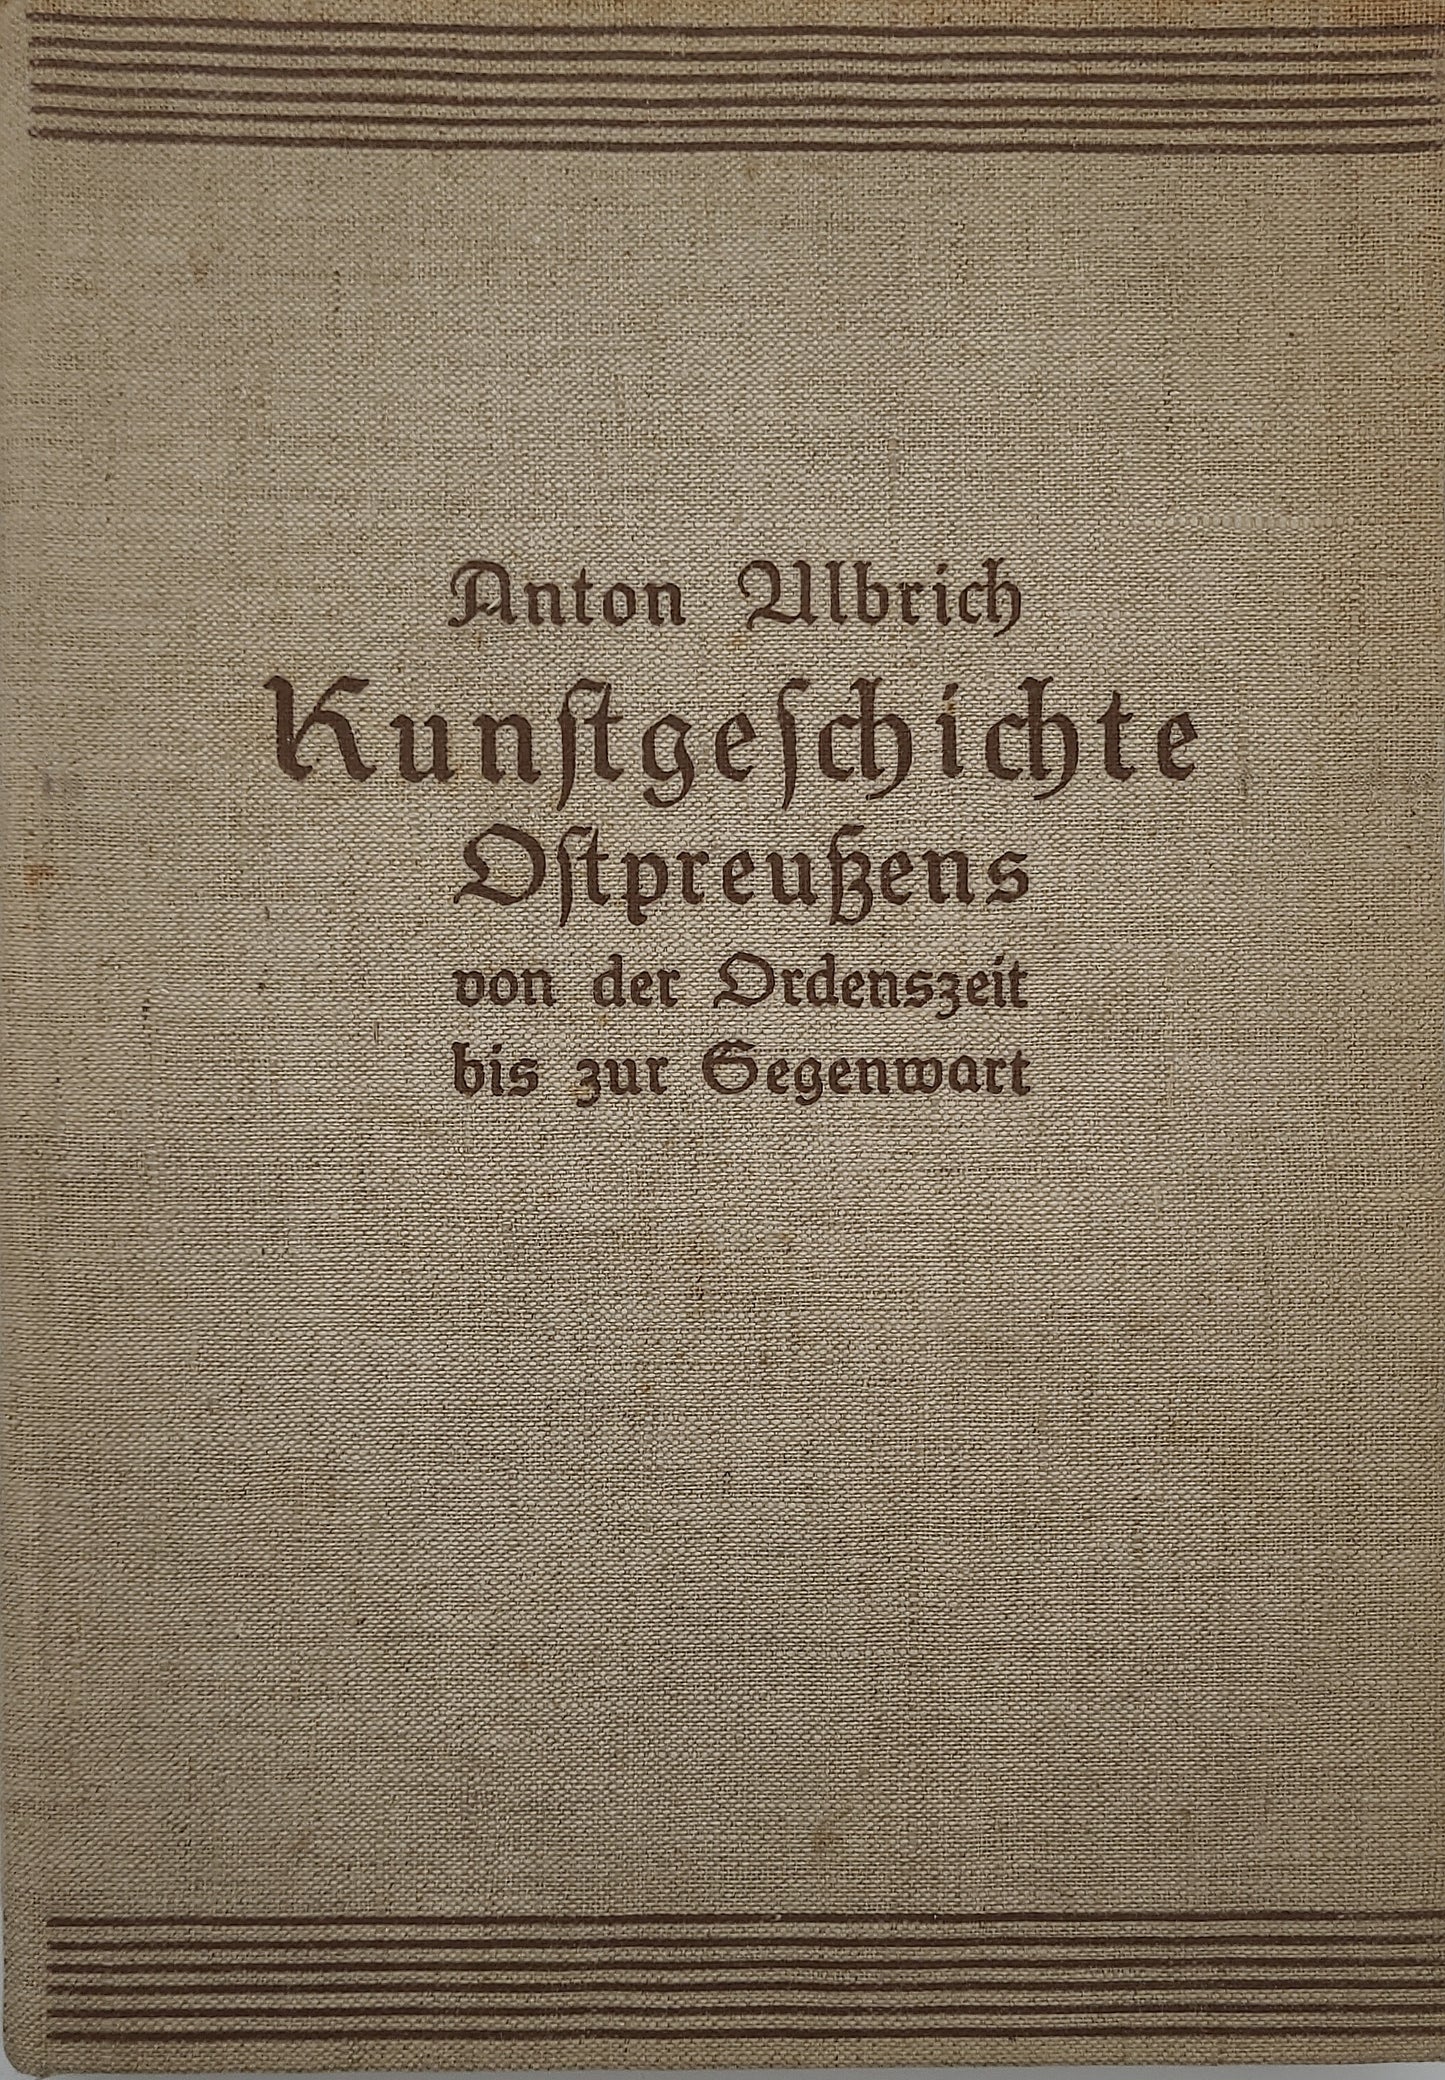 Kunstgeschichte Ostpreußens (Original)